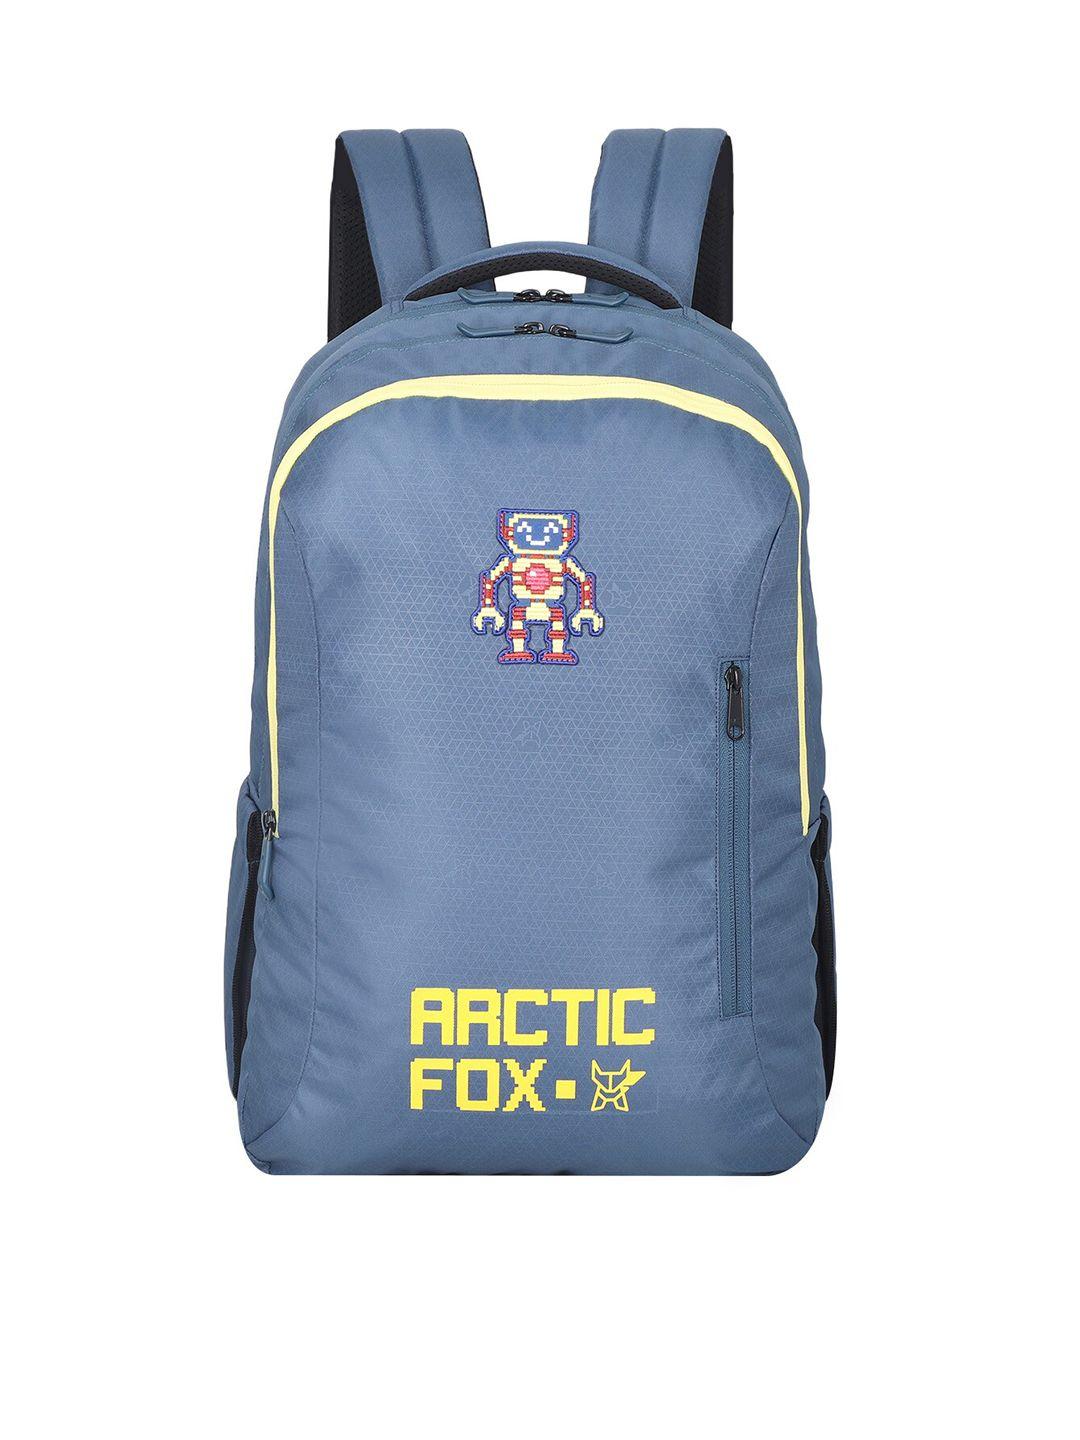 arctic fox printed water resistant back pack